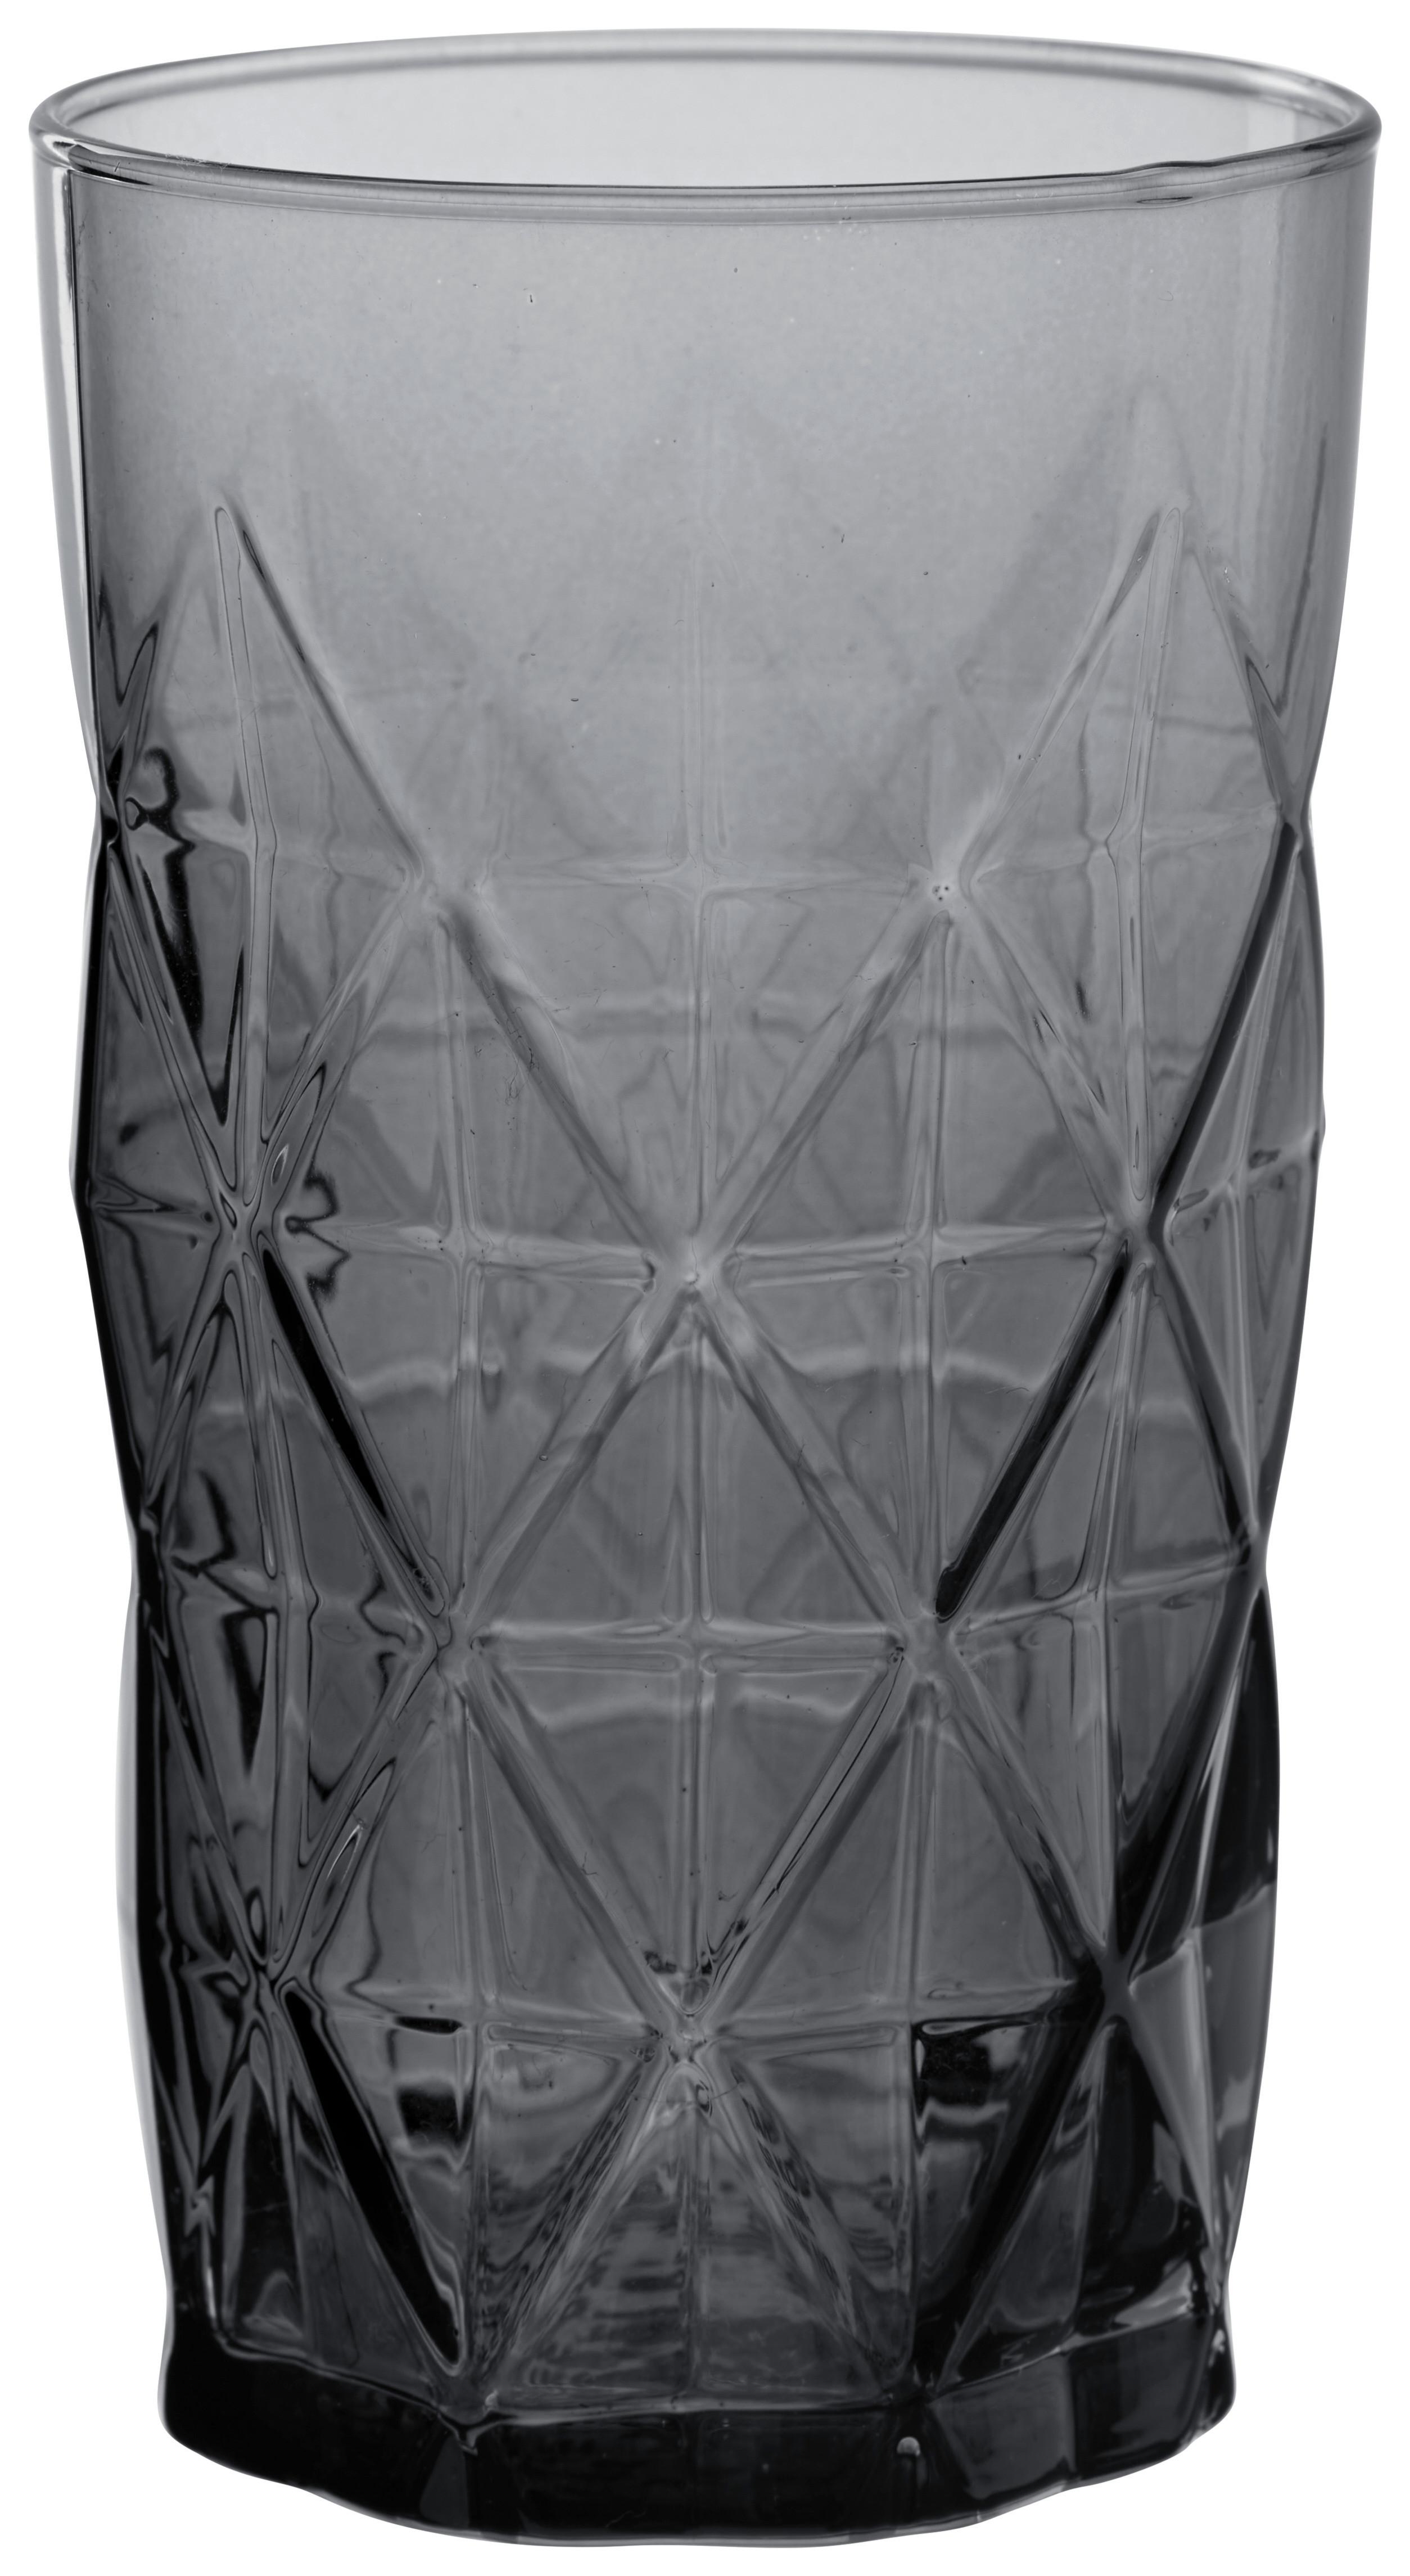 Sklenička Na Longdrink Black Skye - tmavě šedá, Moderní, sklo (8,1/13,5cm) - Premium Living